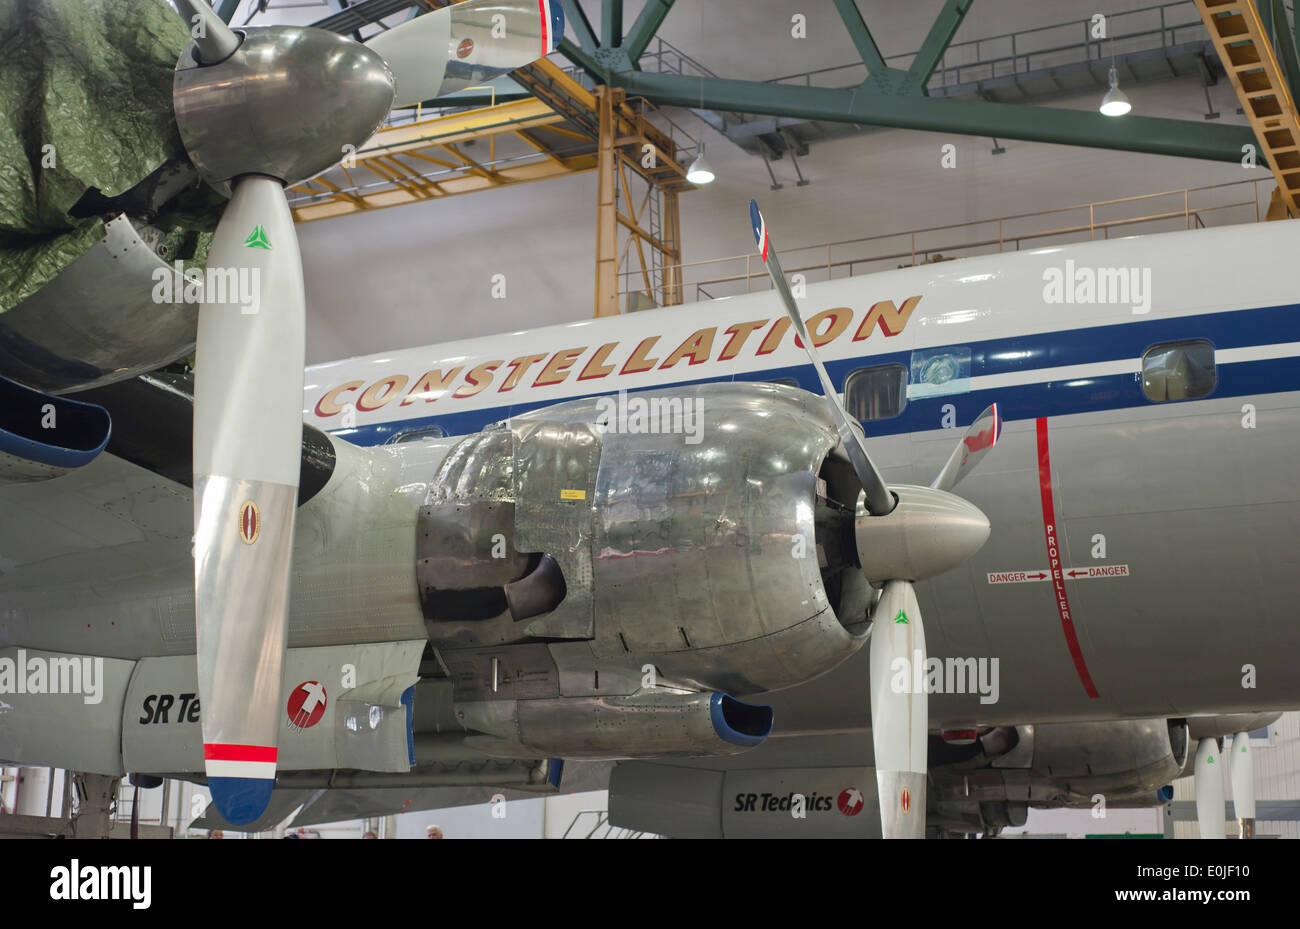 The Historic Passenger Aircraft Lockheed Super Constellation